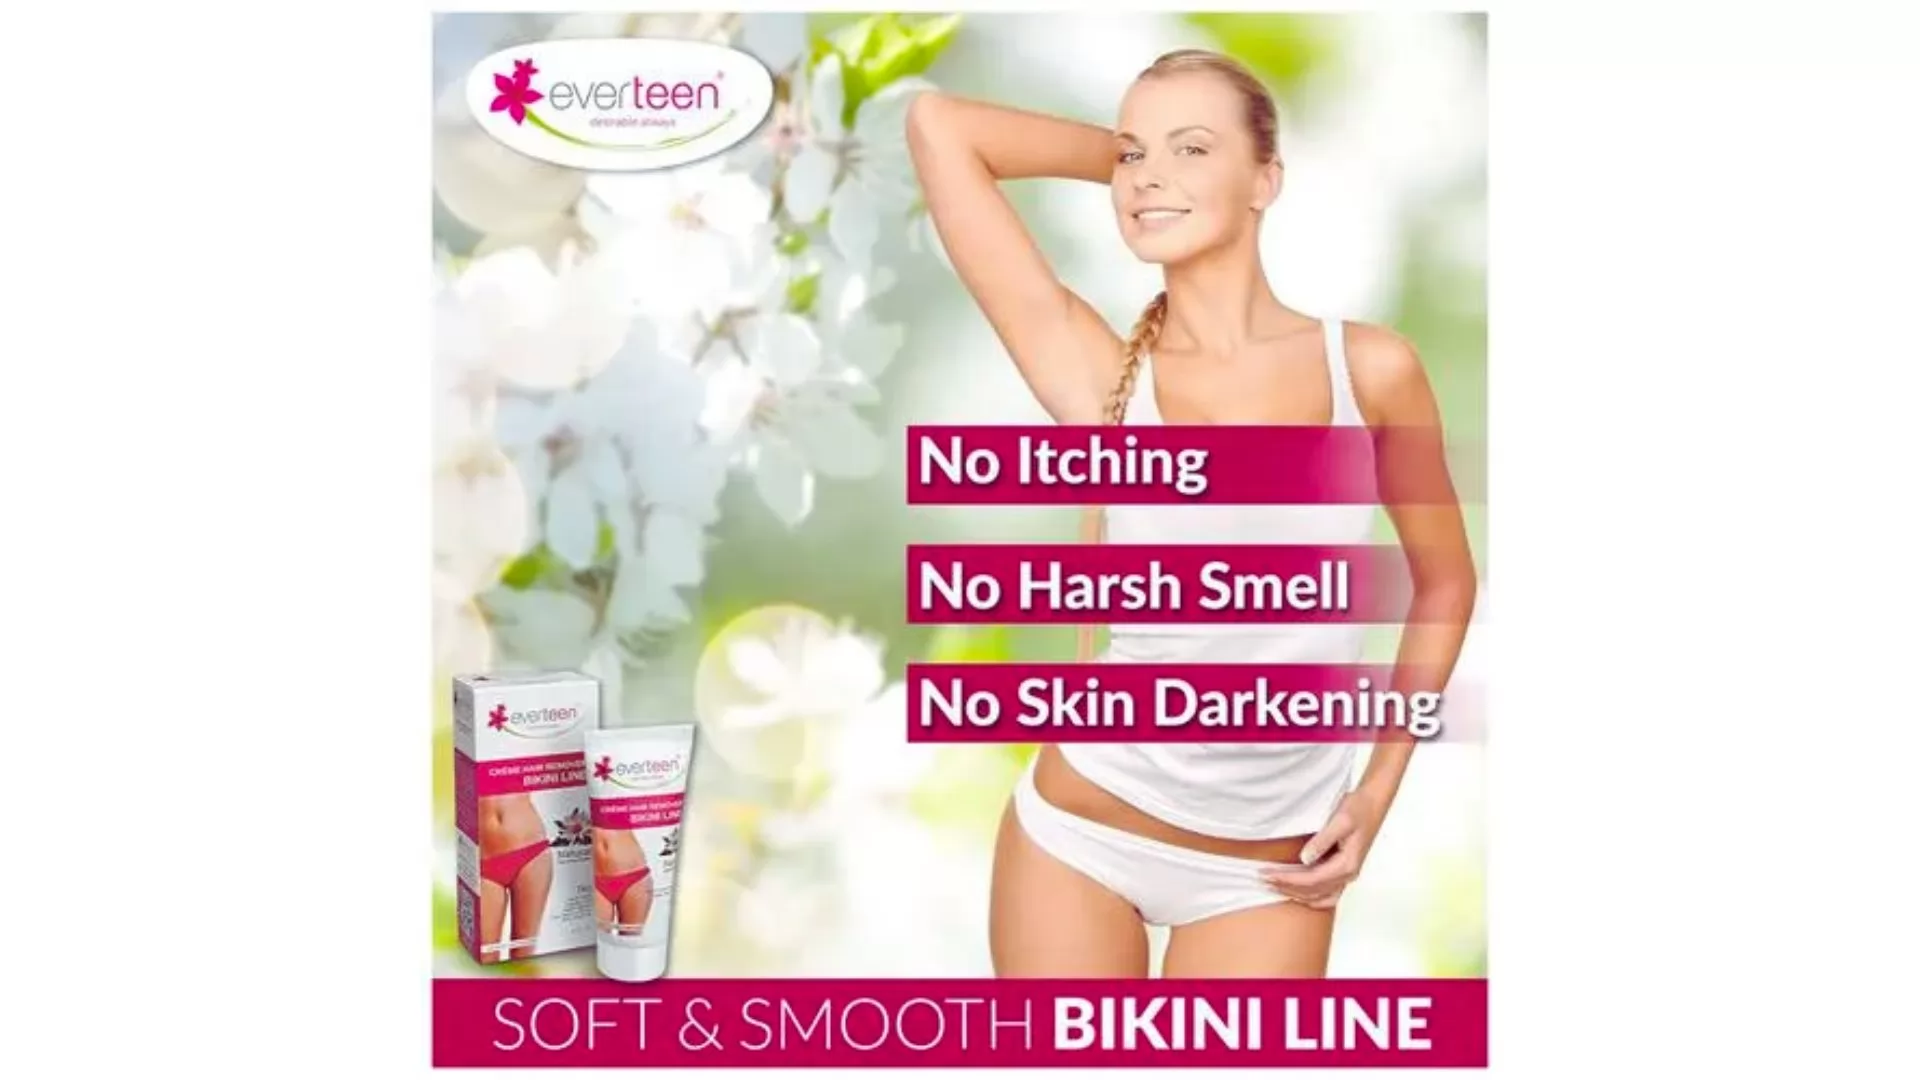 Everteen Bikini Line hair removal cream